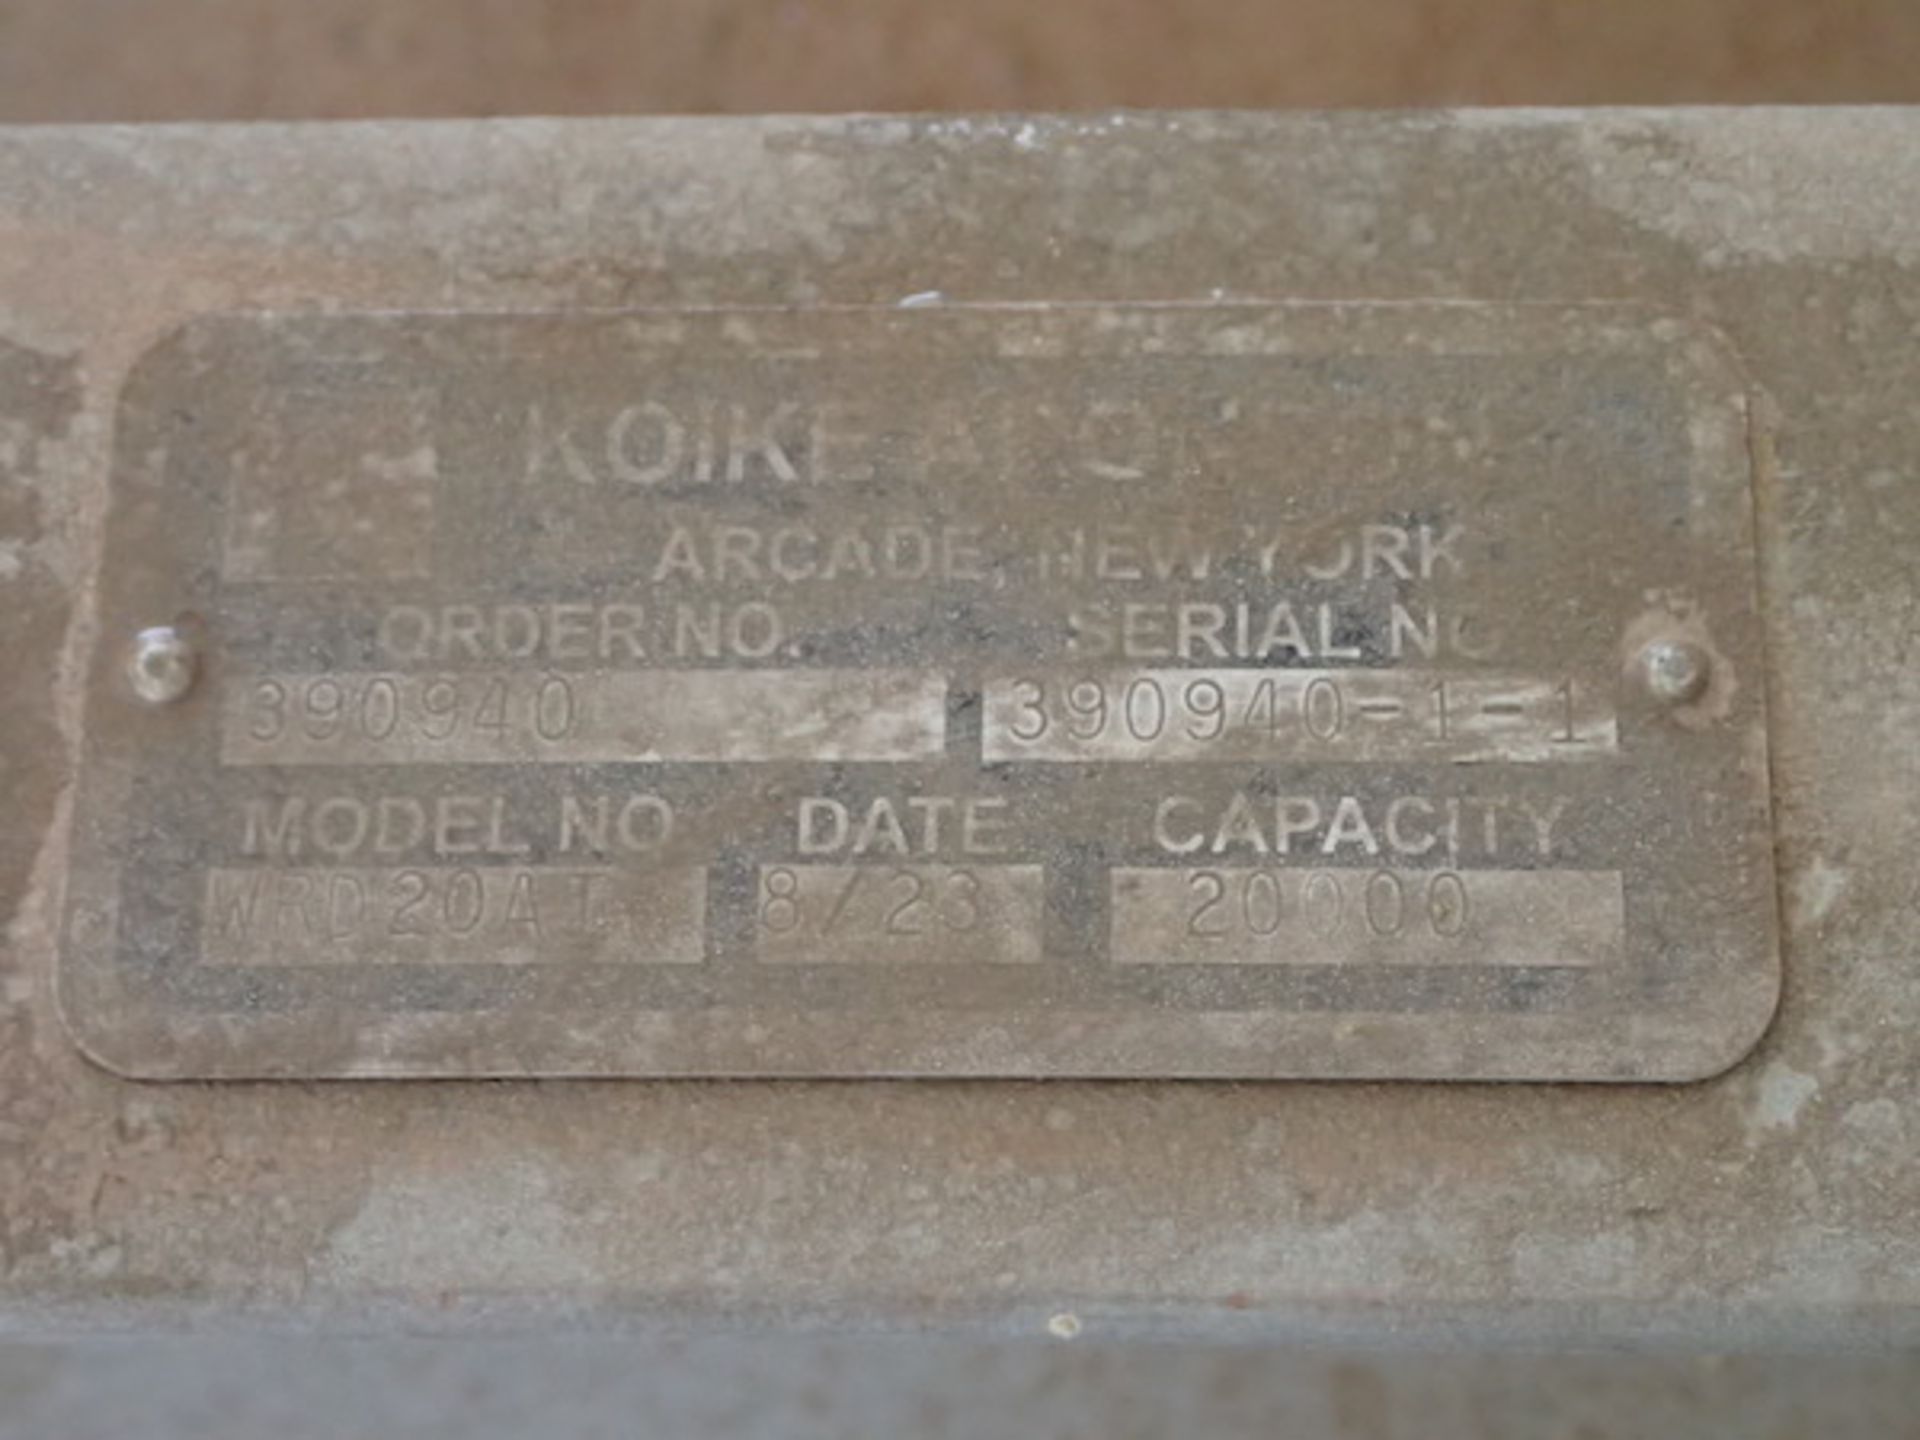 Lot - Koike Aronson Ransome 20,000 lb. Cap. Model WRD20ATR Power Turning Roll, S/N: 390940-1-1 ( - Image 8 of 8